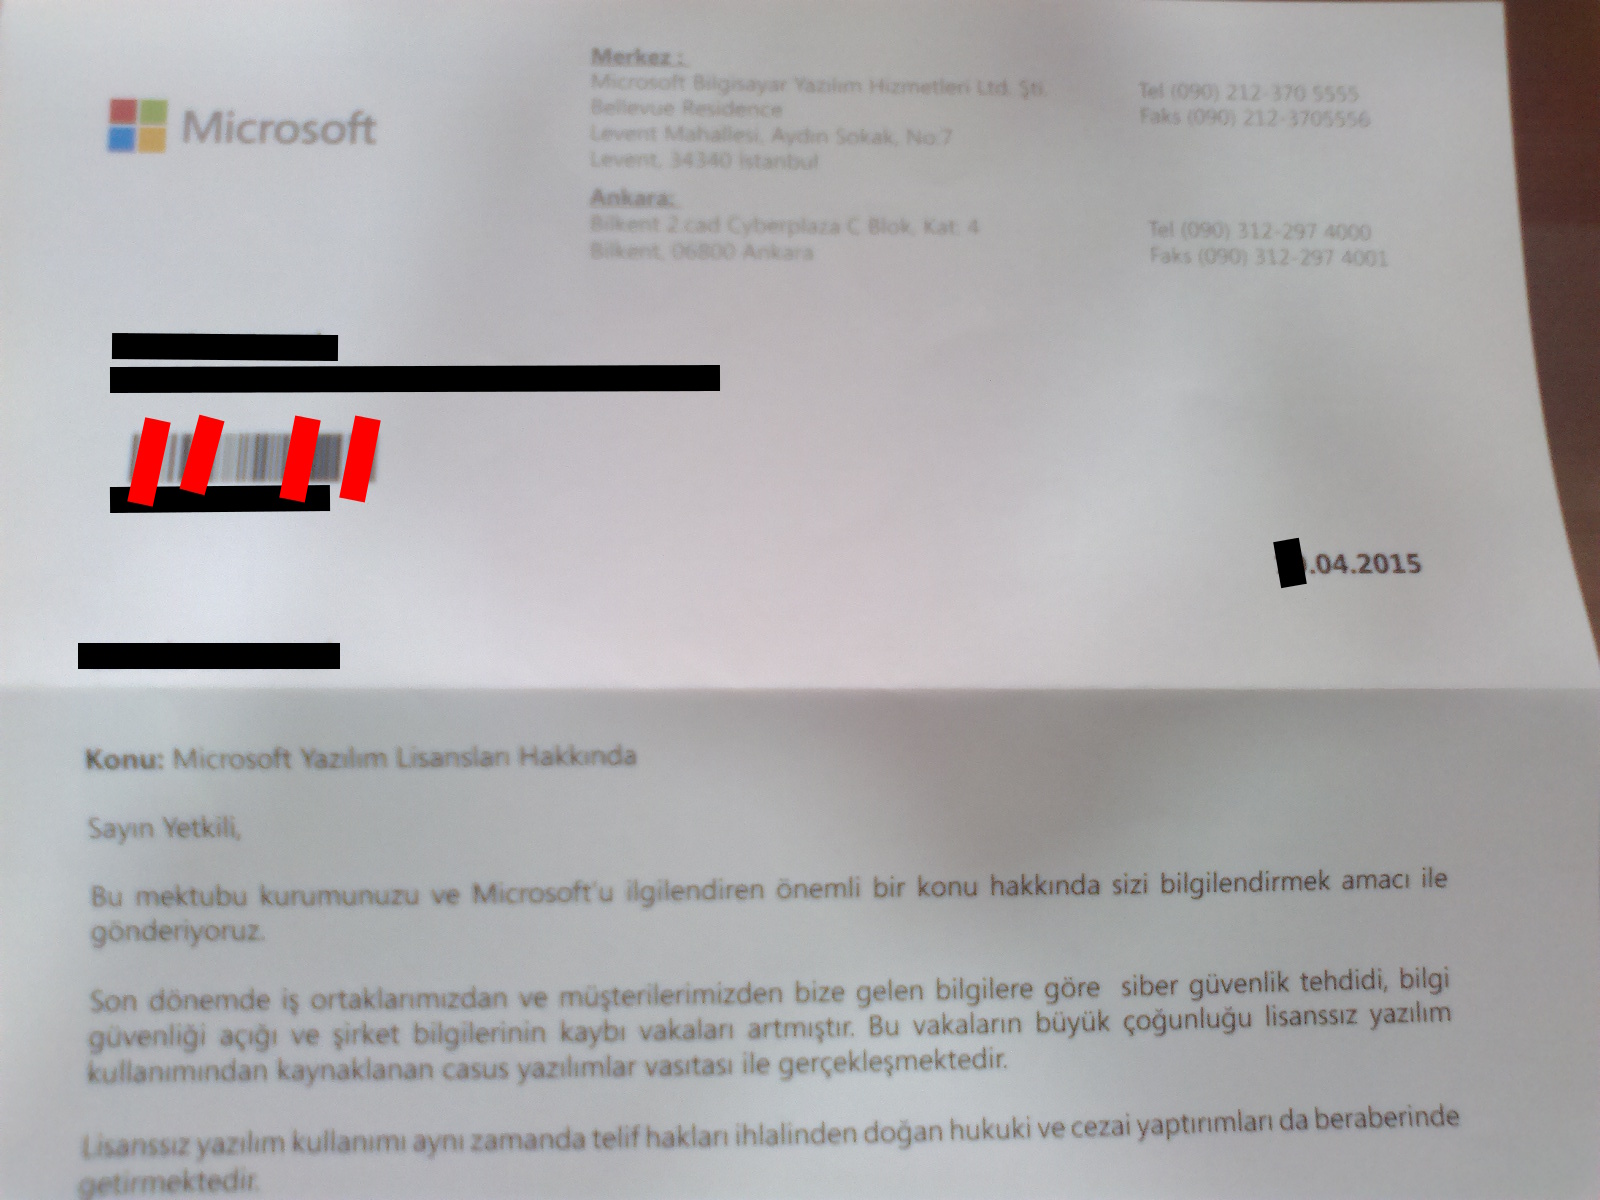  Microsoft'dan Tehtid Mektubu??